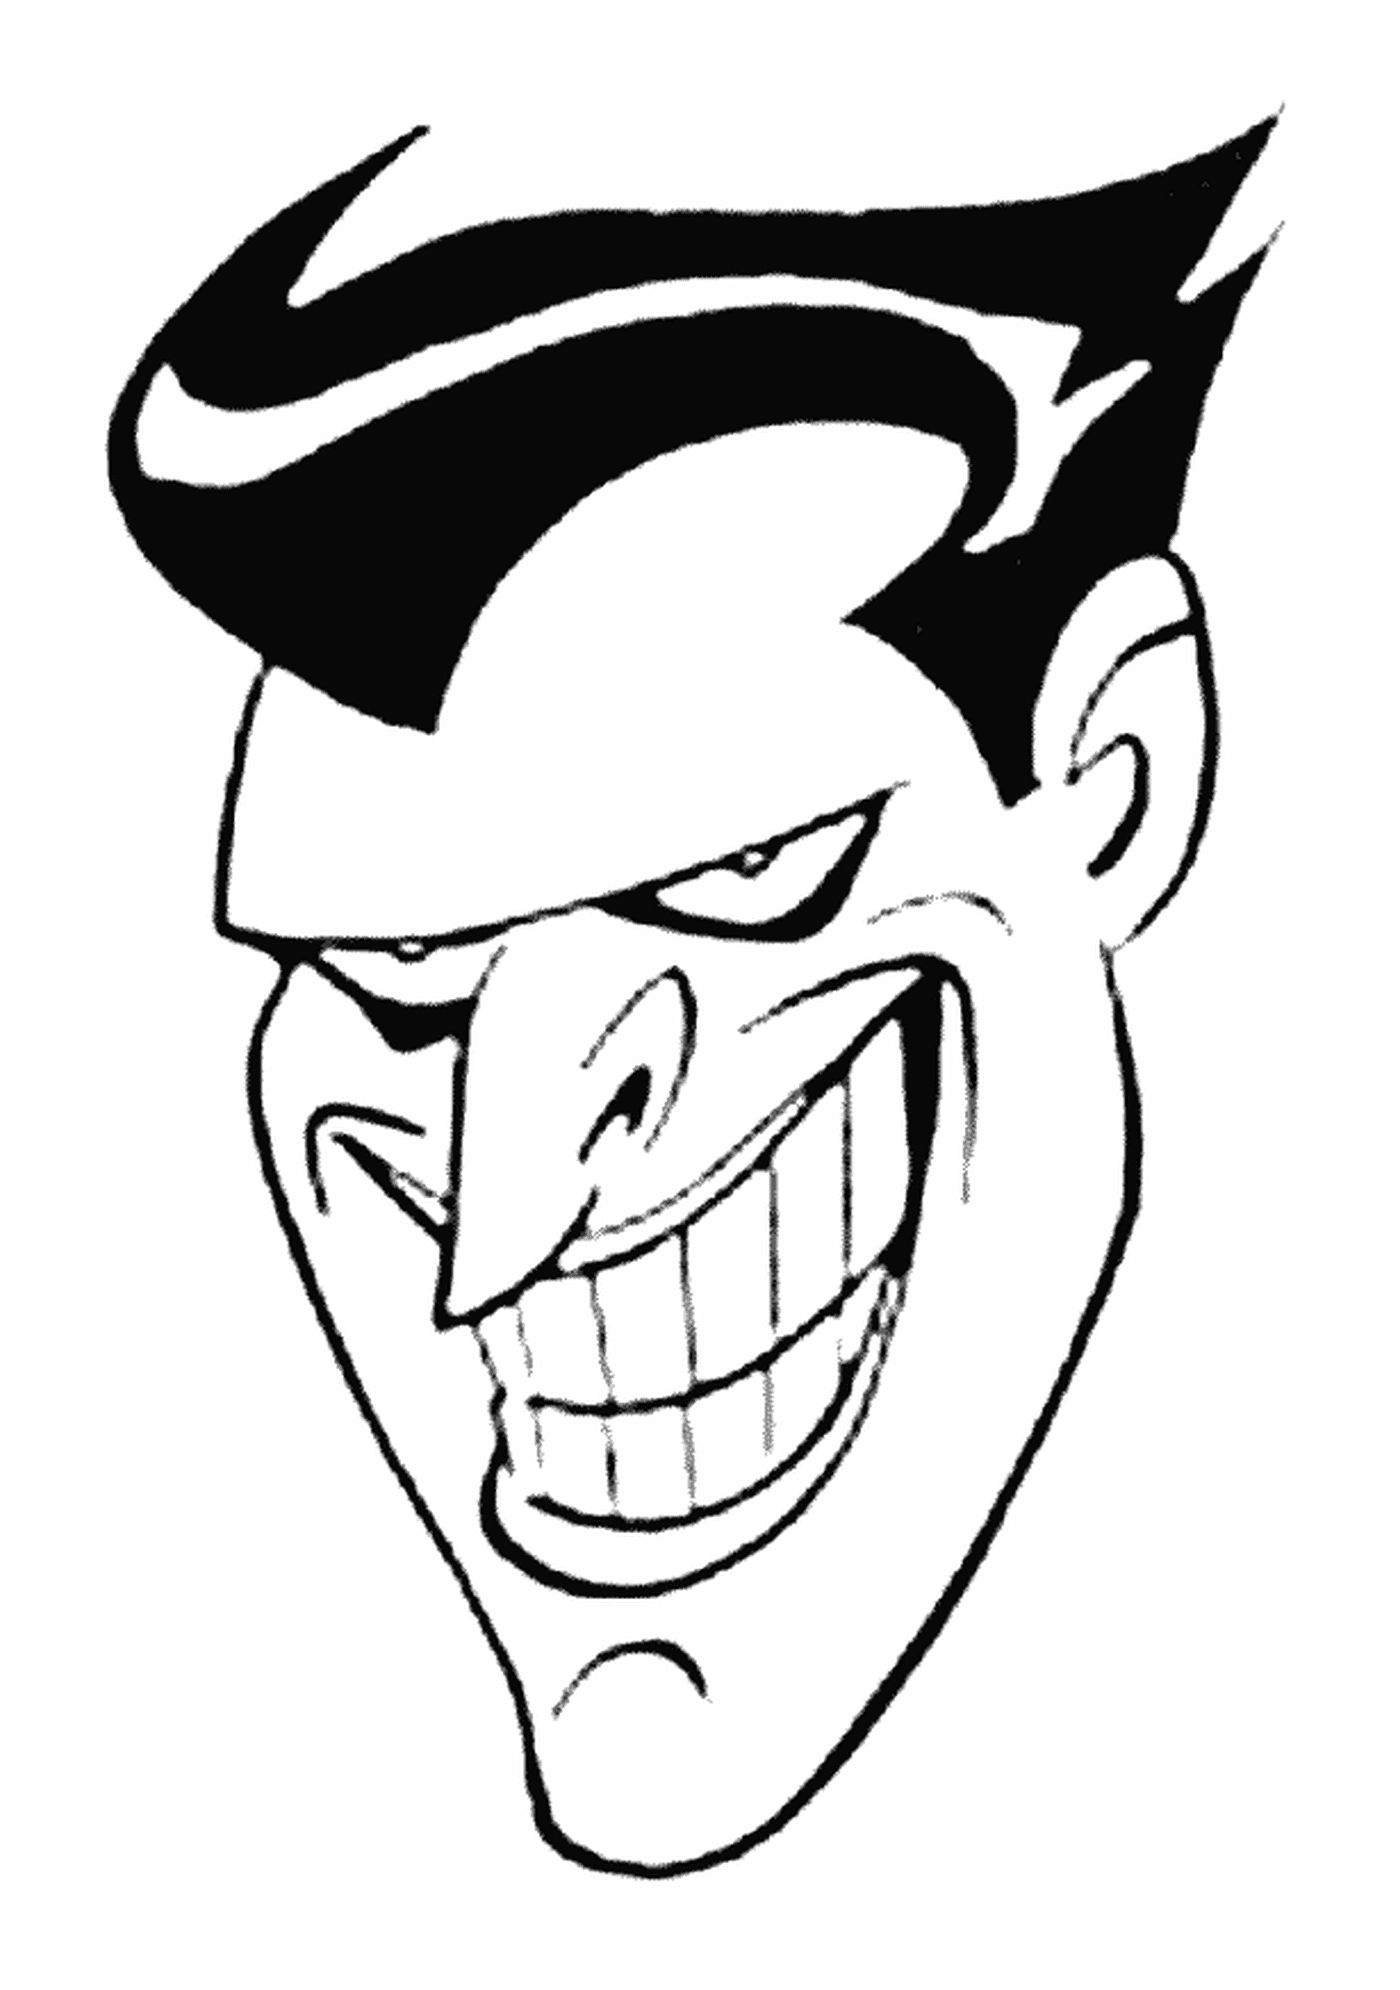  El jefe del Joker de Batman, la serie animada 